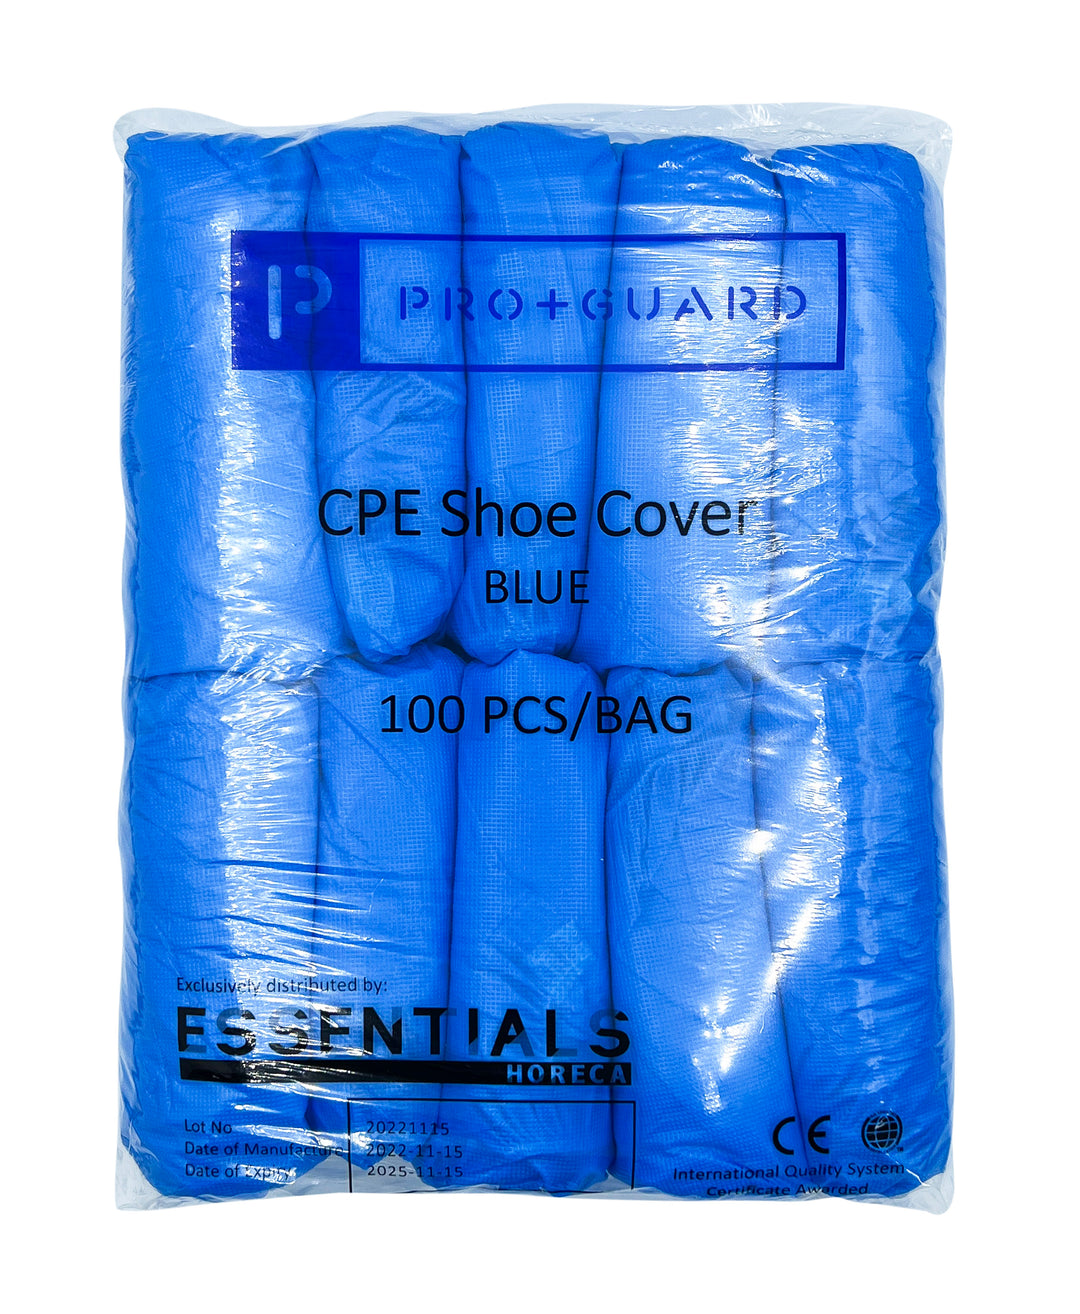 Pro+Guard CPE Shoe Cover (Blue)